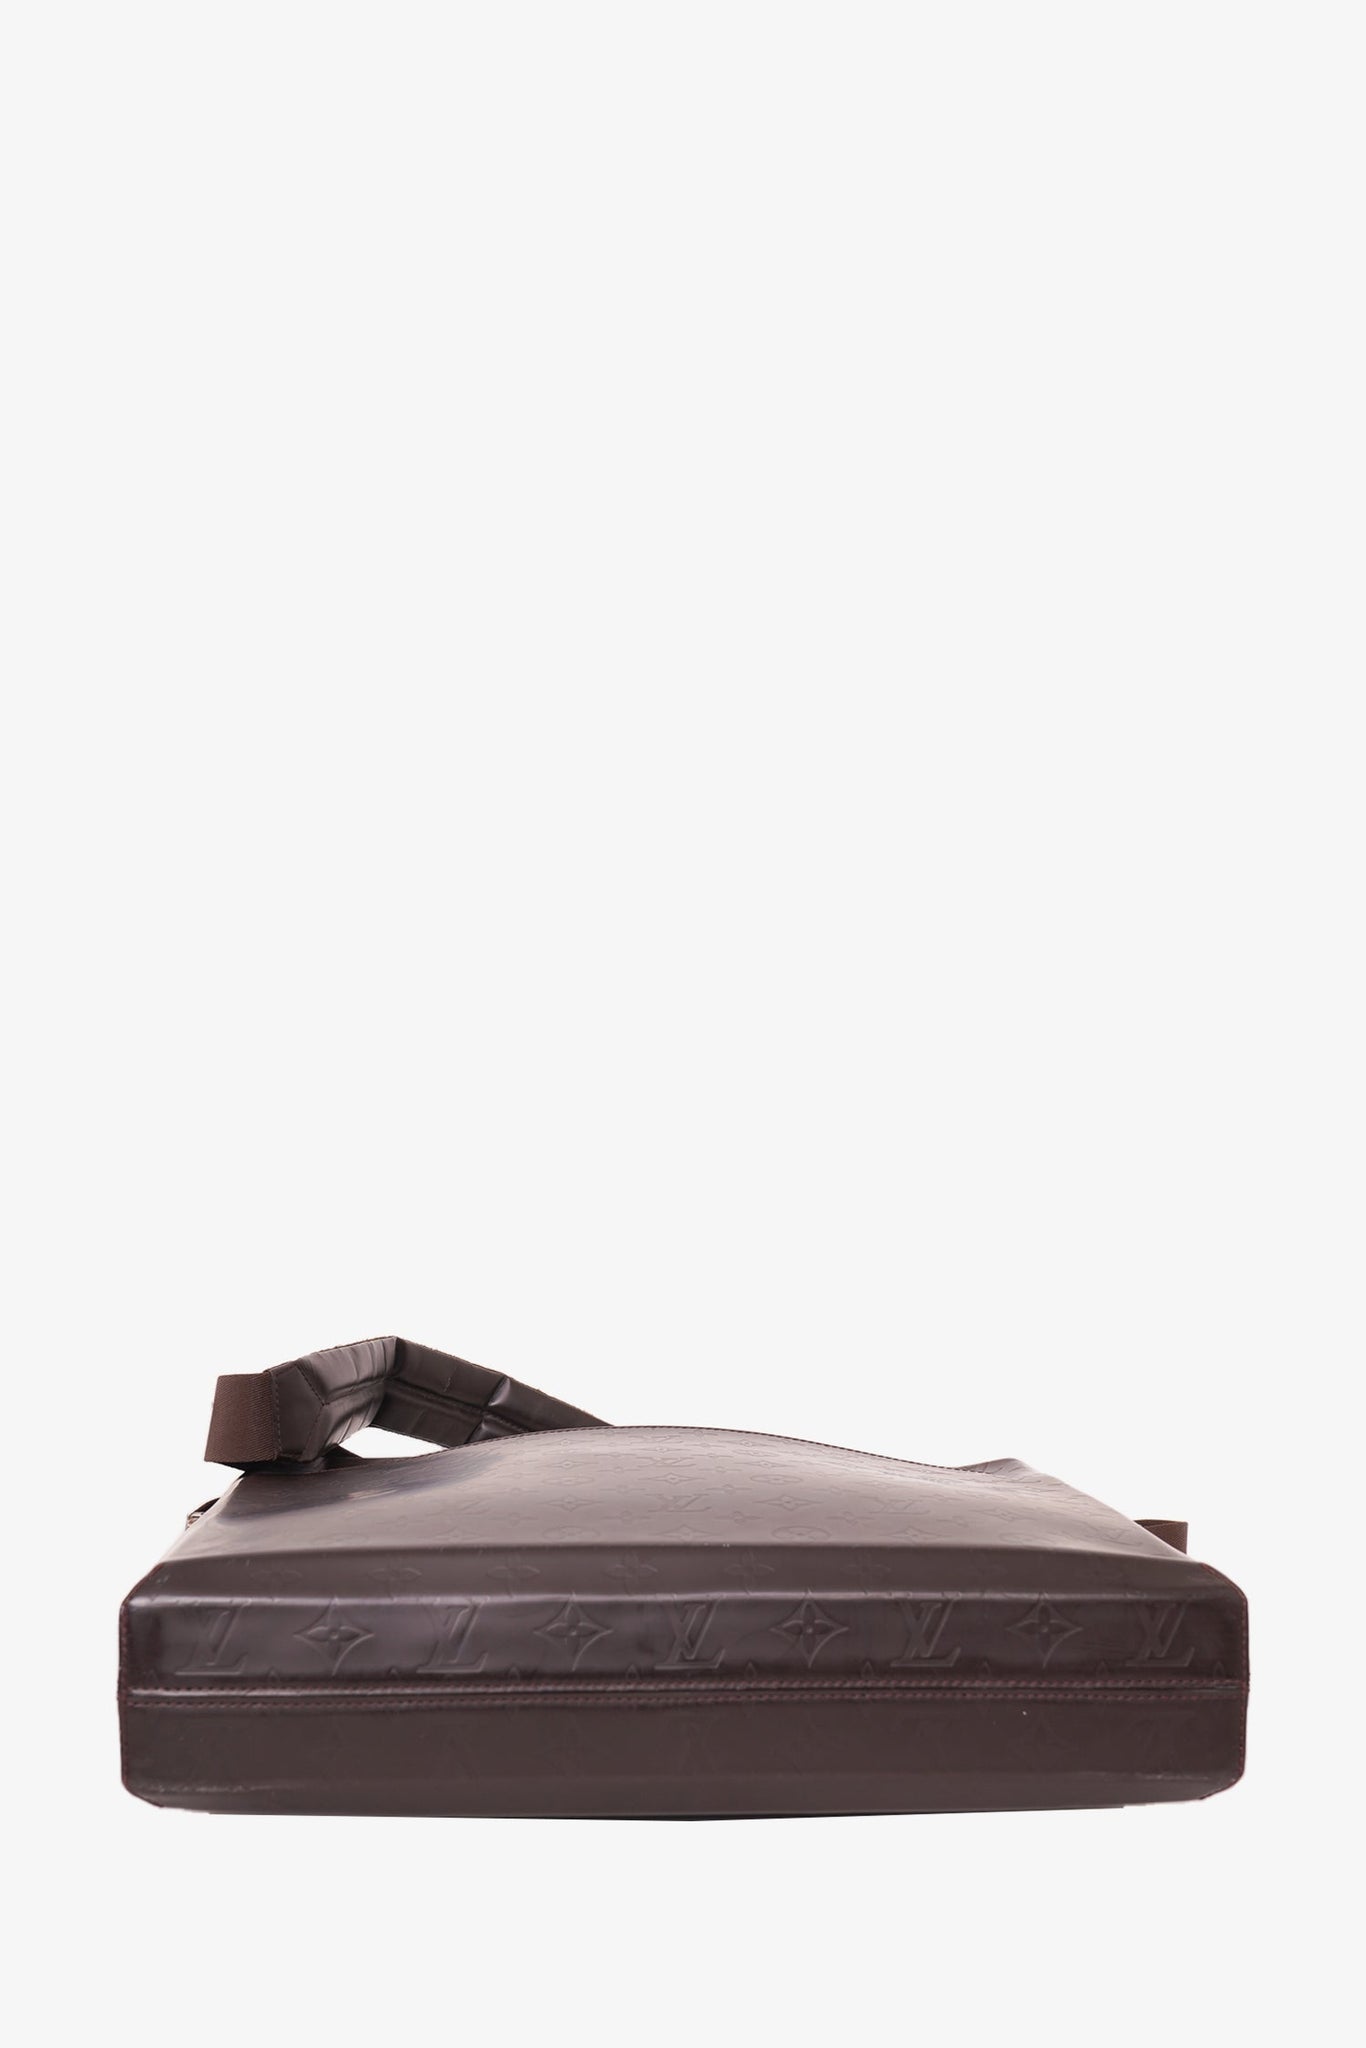 Louis Vuitton Fonzie Handbag Monogram Glace Leather Brown